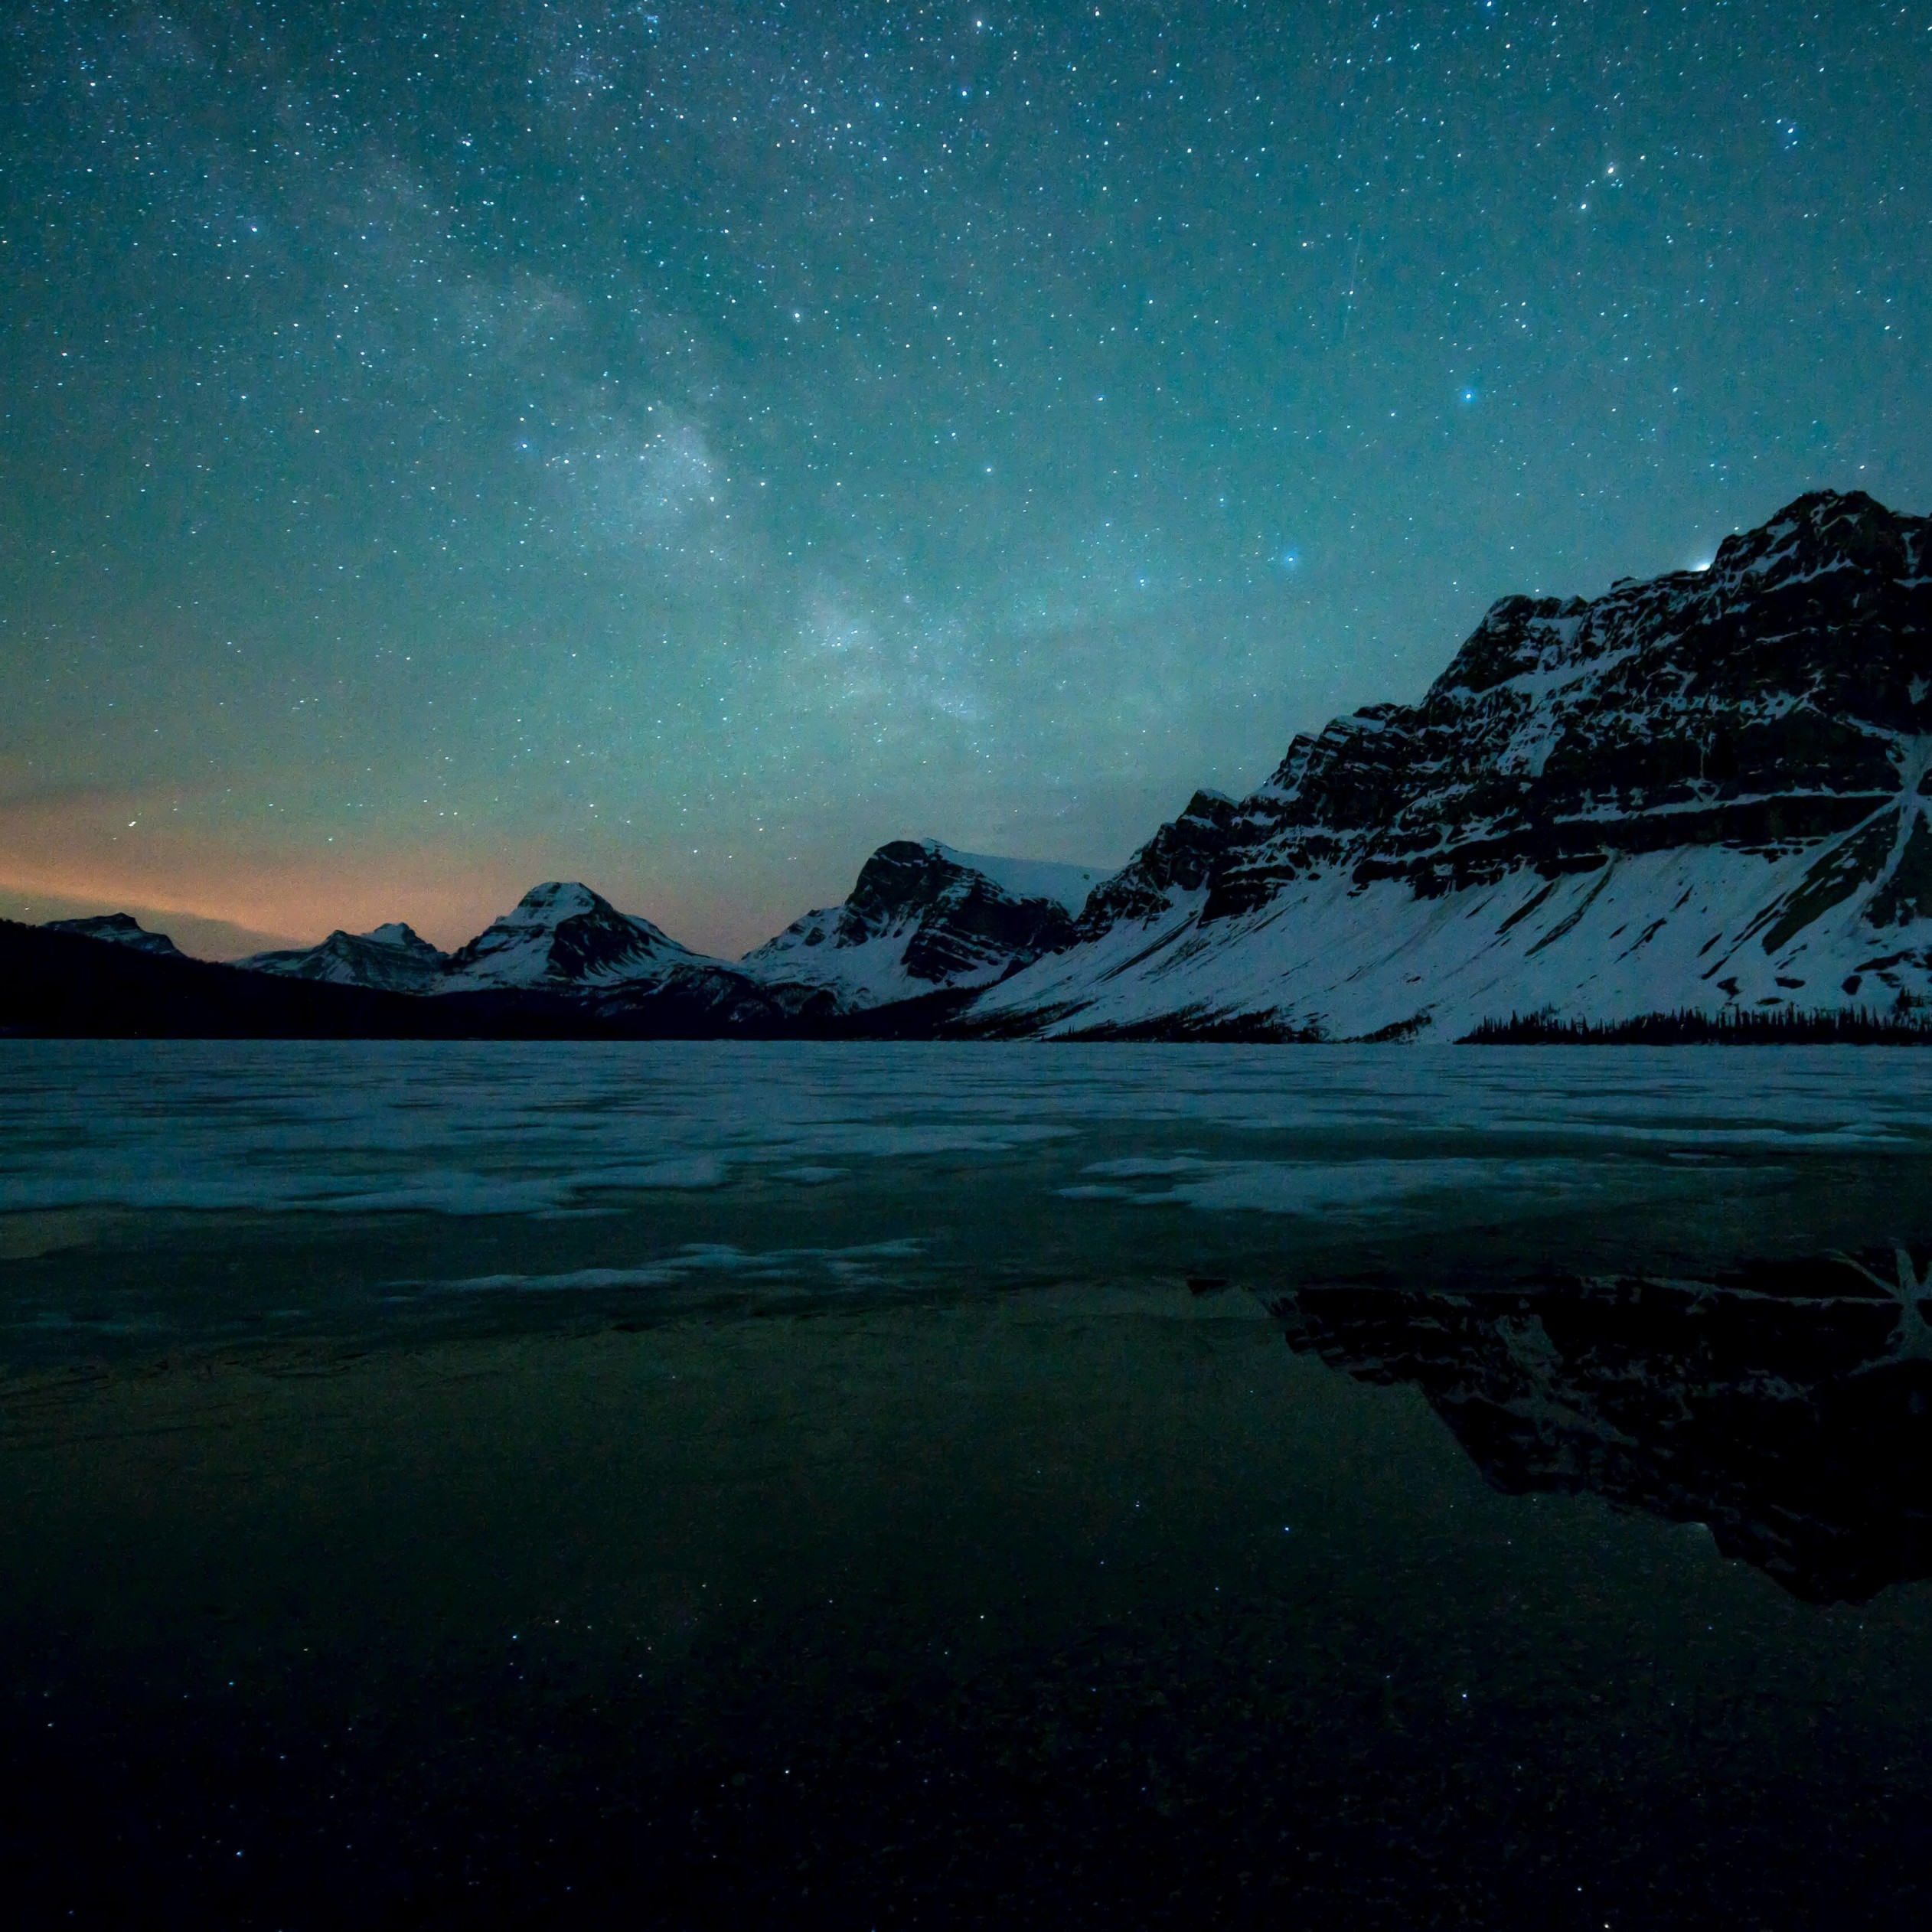 Milky Way over Bow Lake, Alberta, Canada Wallpaper for Apple iPad mini 2